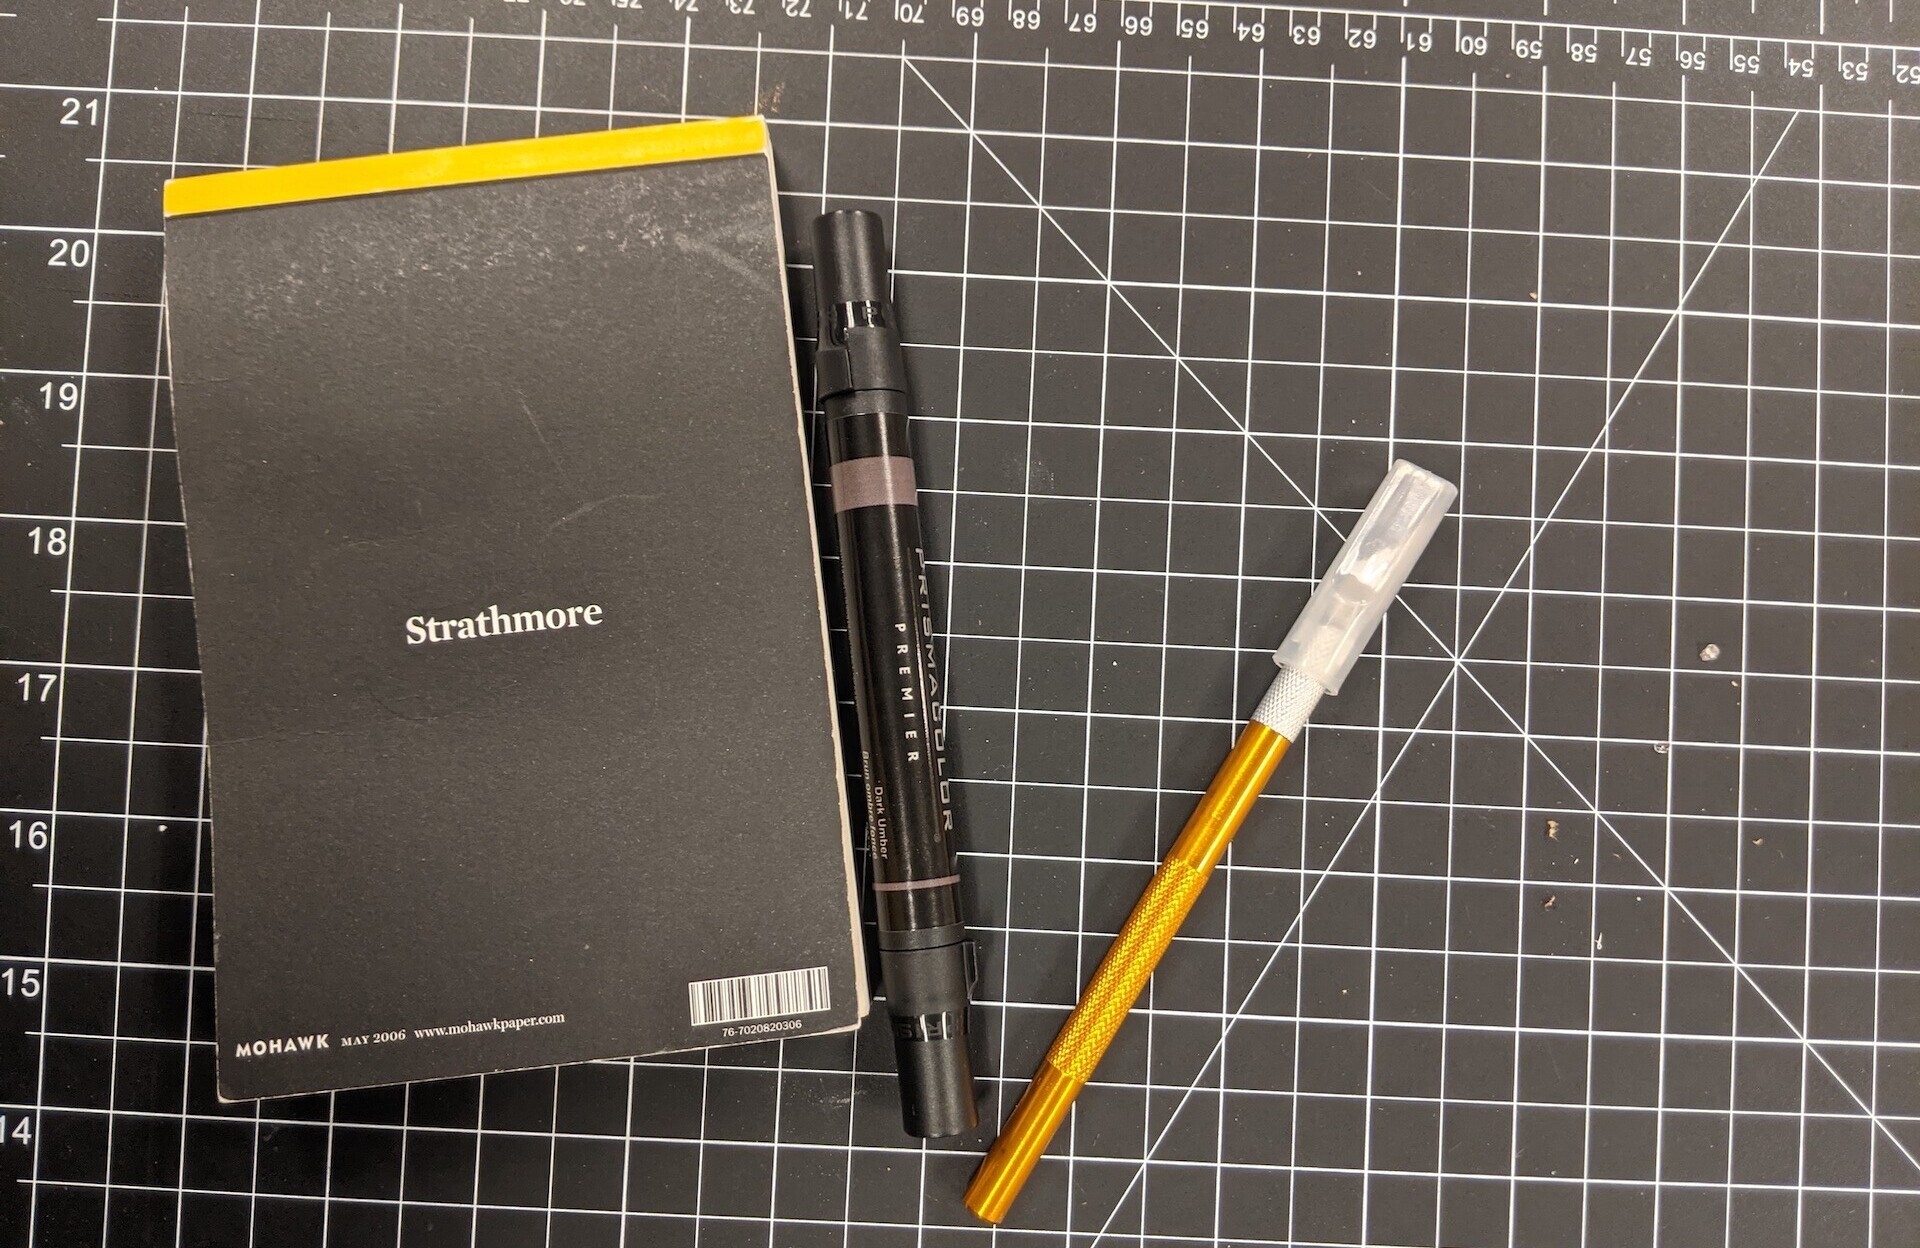 Notebook, pen, cutting knife and cutting mat